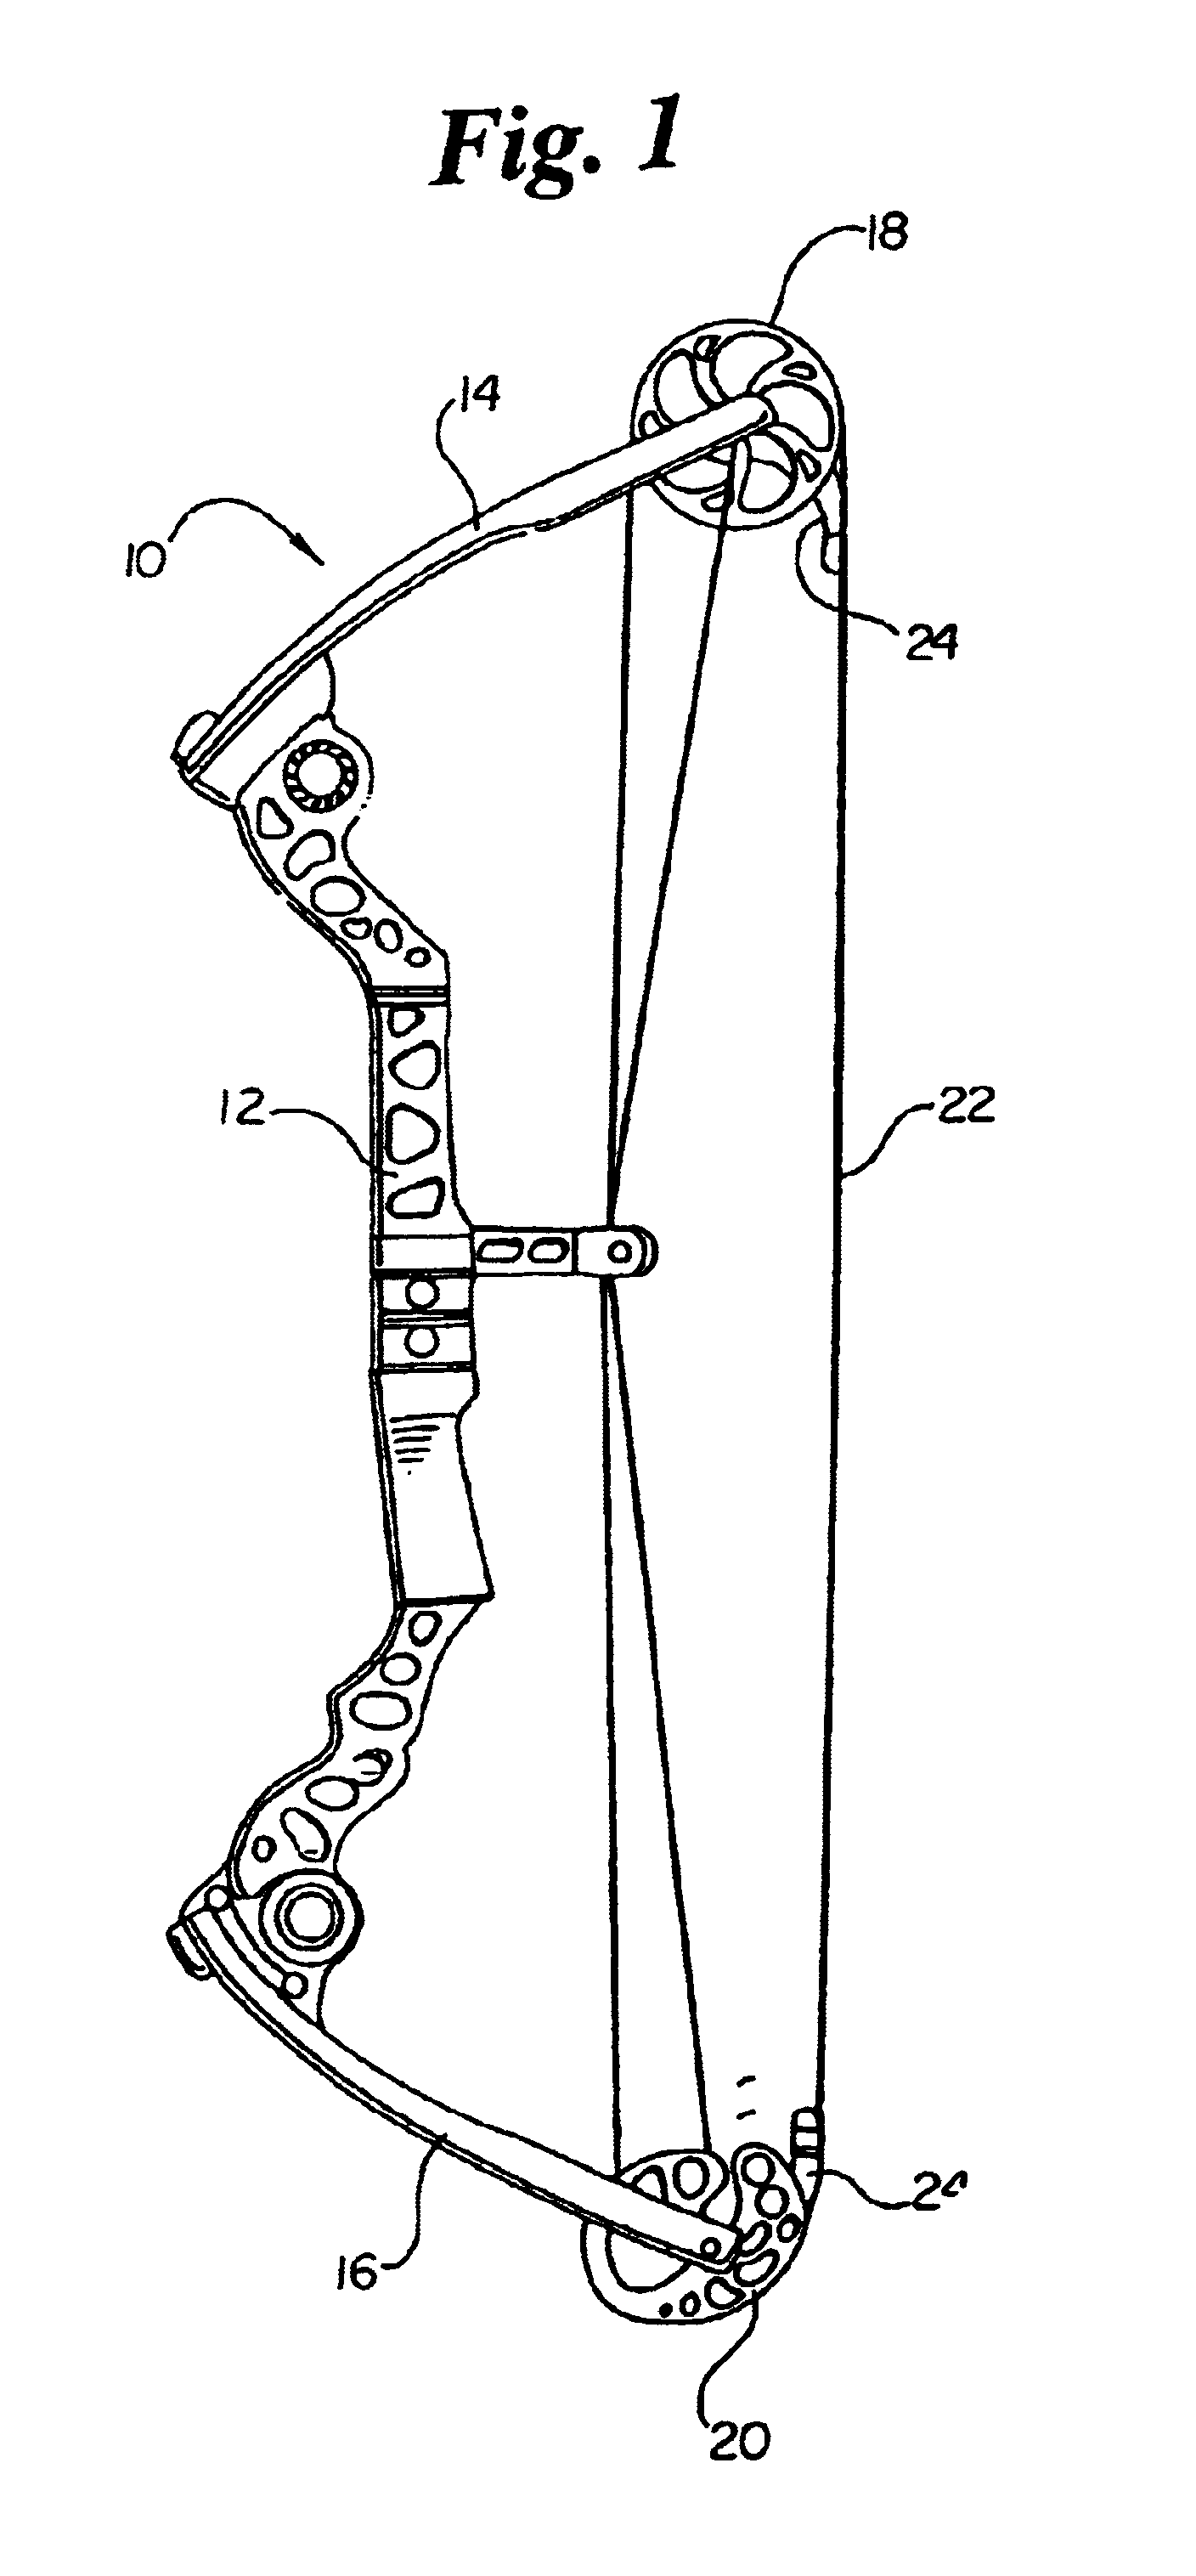 Bow string vibration suppressor